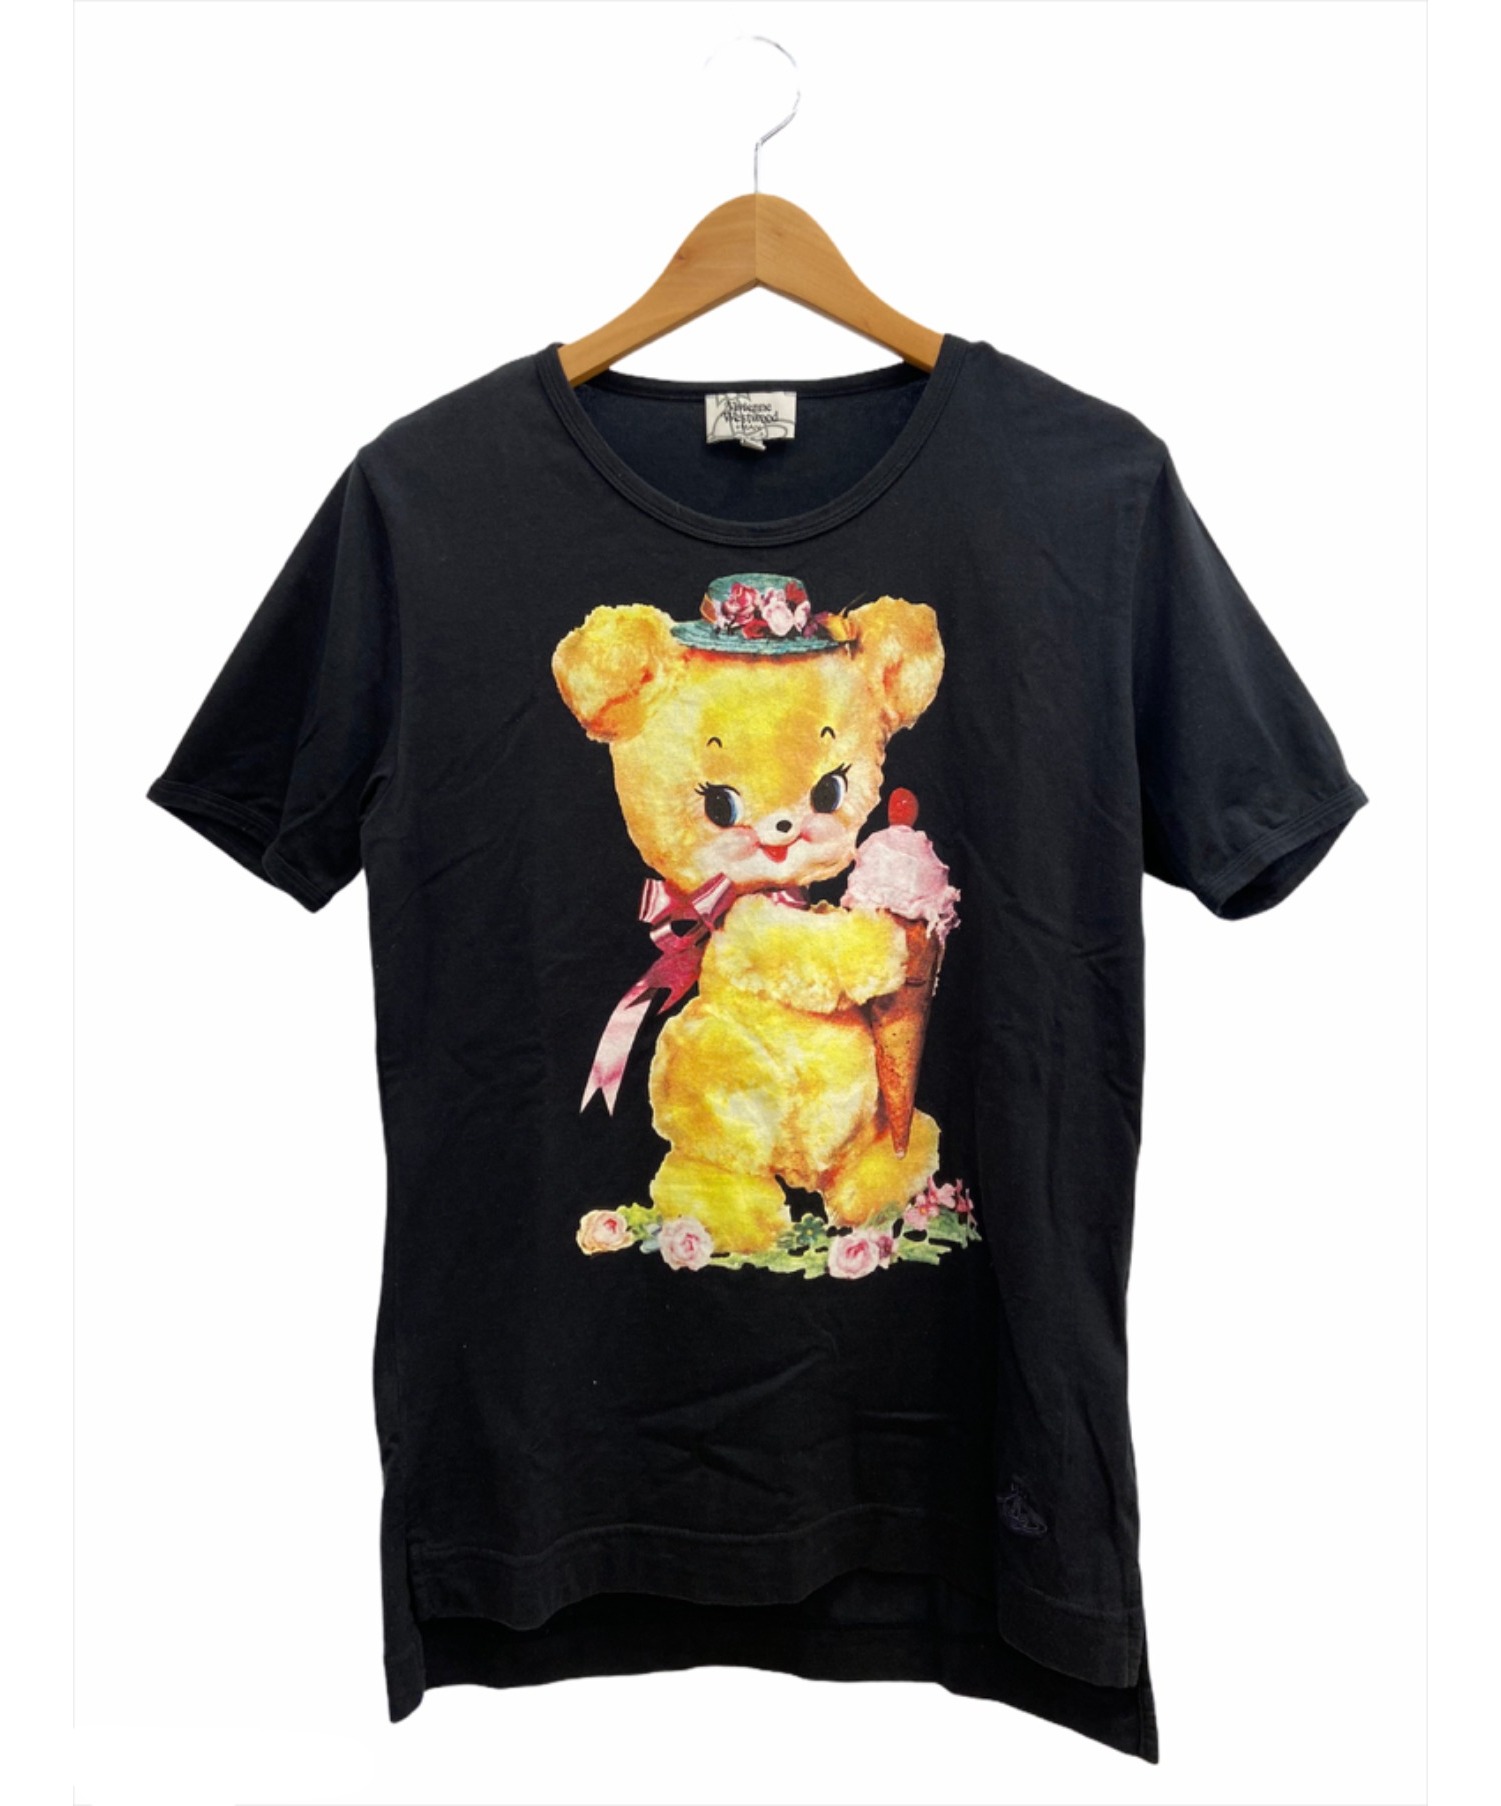 ViviennewestwoodMAN新品Tシャツ46